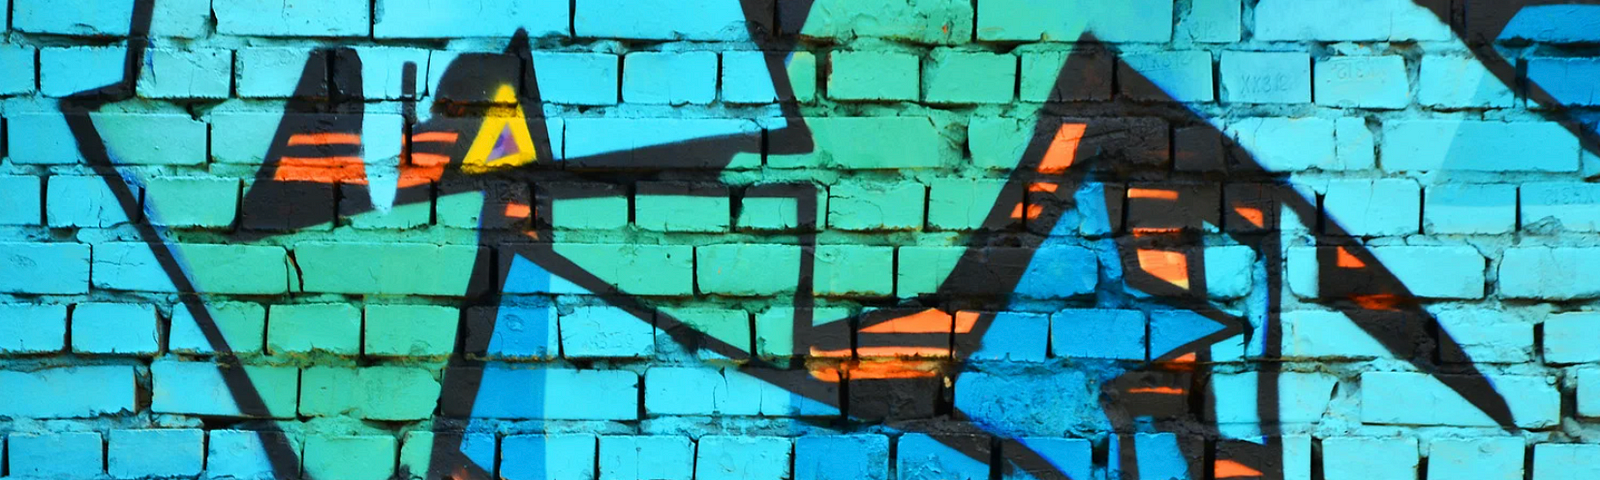 Turquoise on brick wall — mural on street art